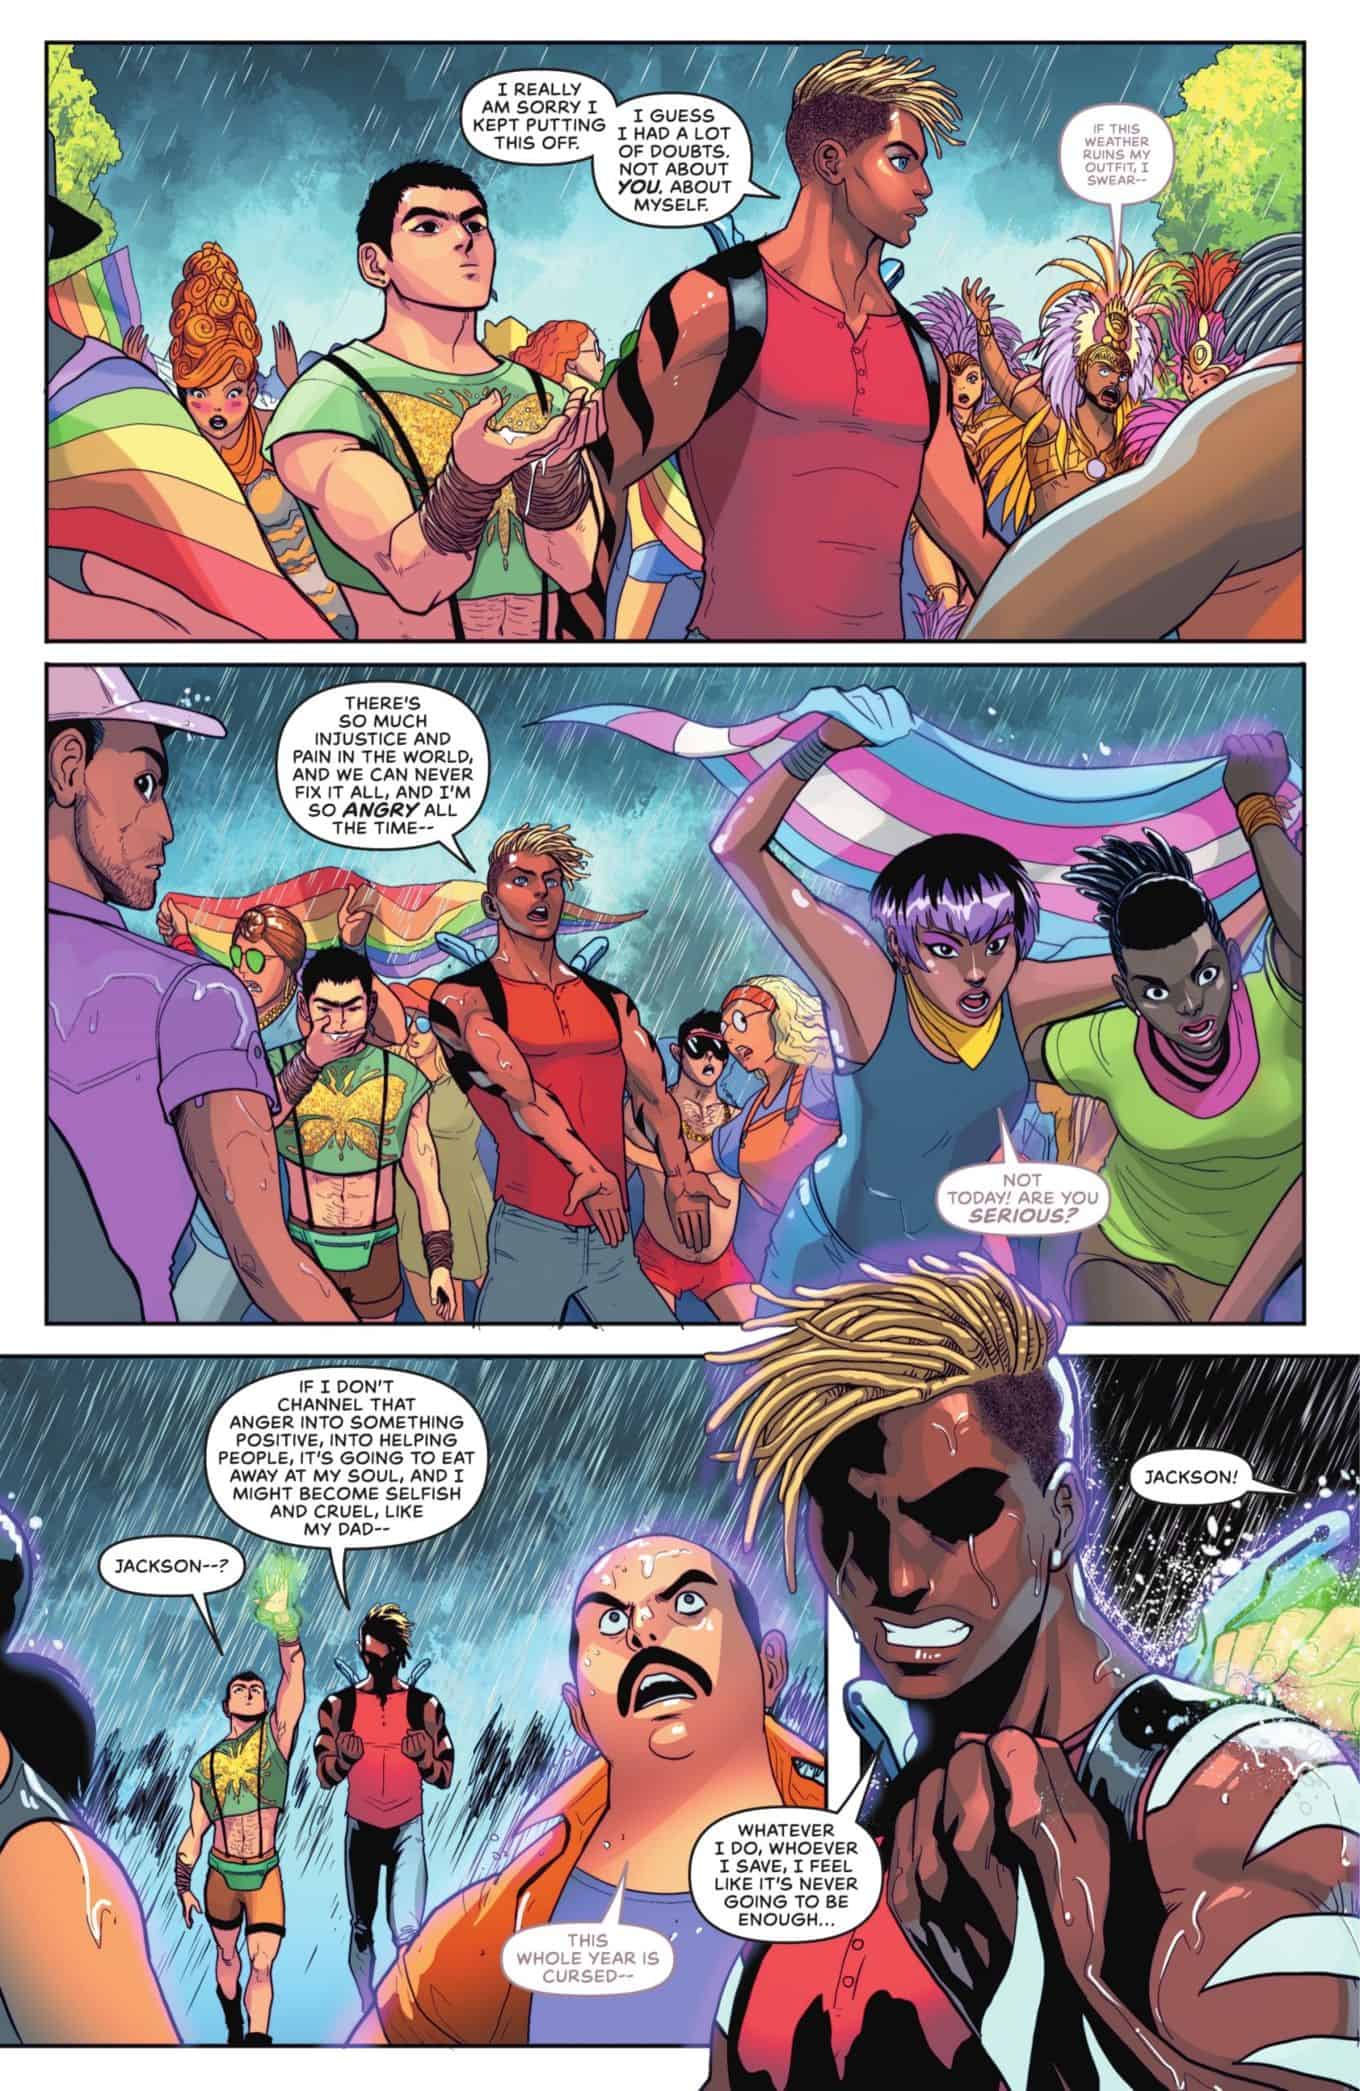 DC Comics & DC Pride 1 Spoilers Justice League Queer (JLQ